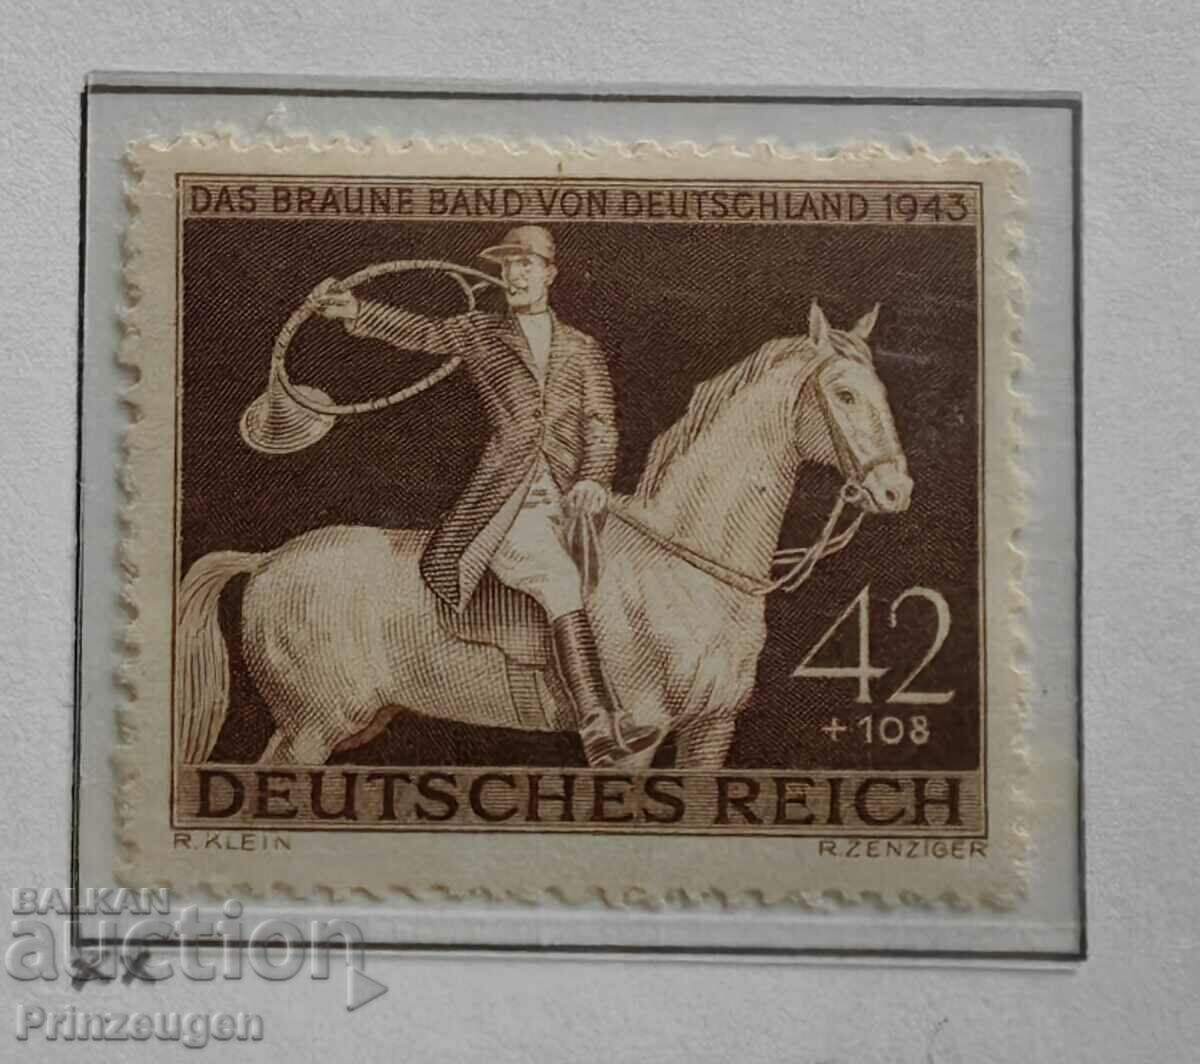 Germany - Third Reich - 1943 - stamp series